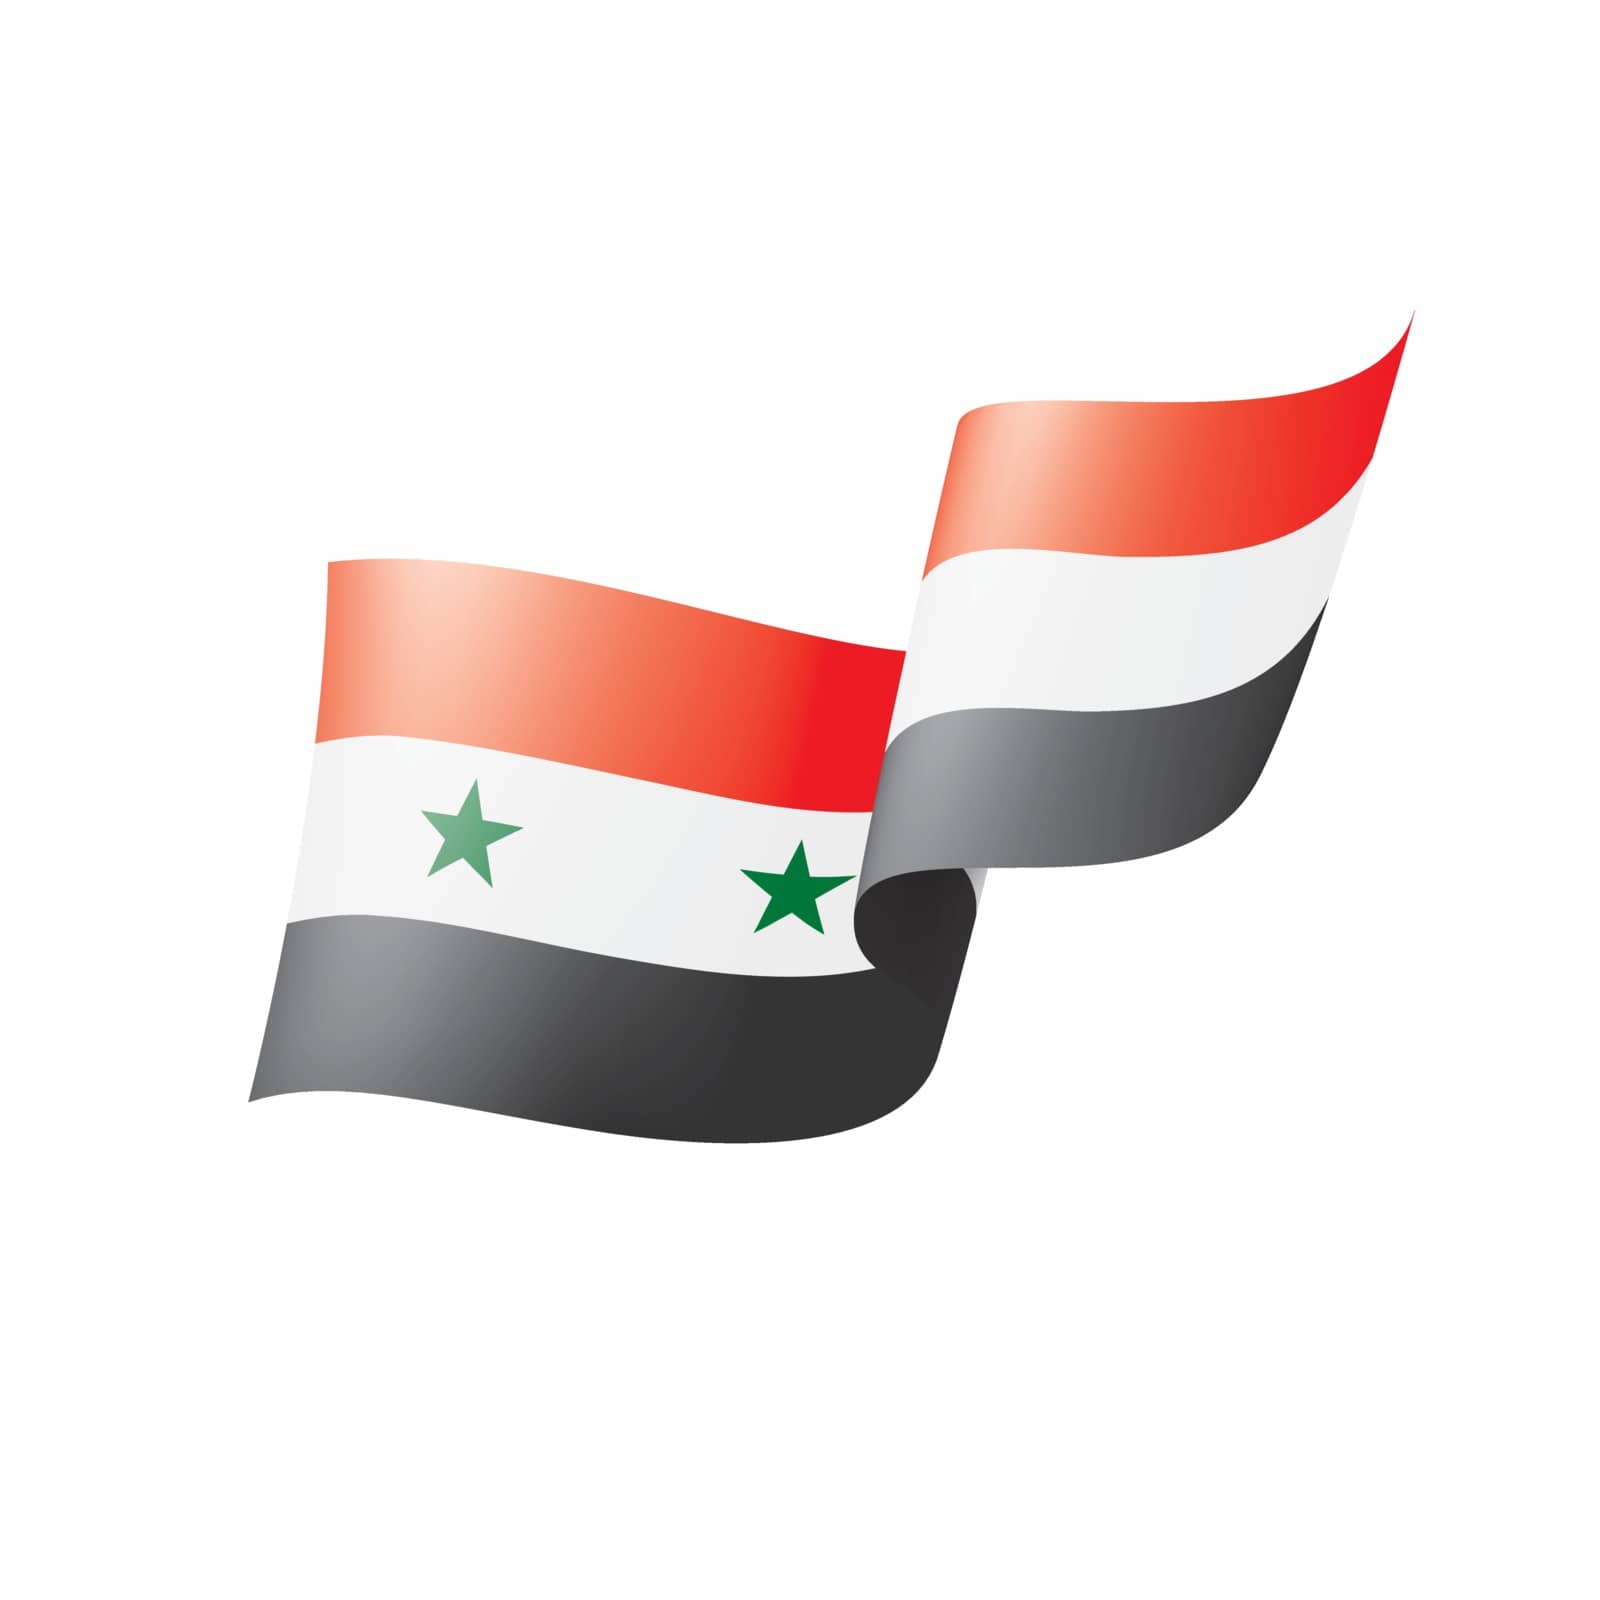 Syria national flag, vector illustration on a white background